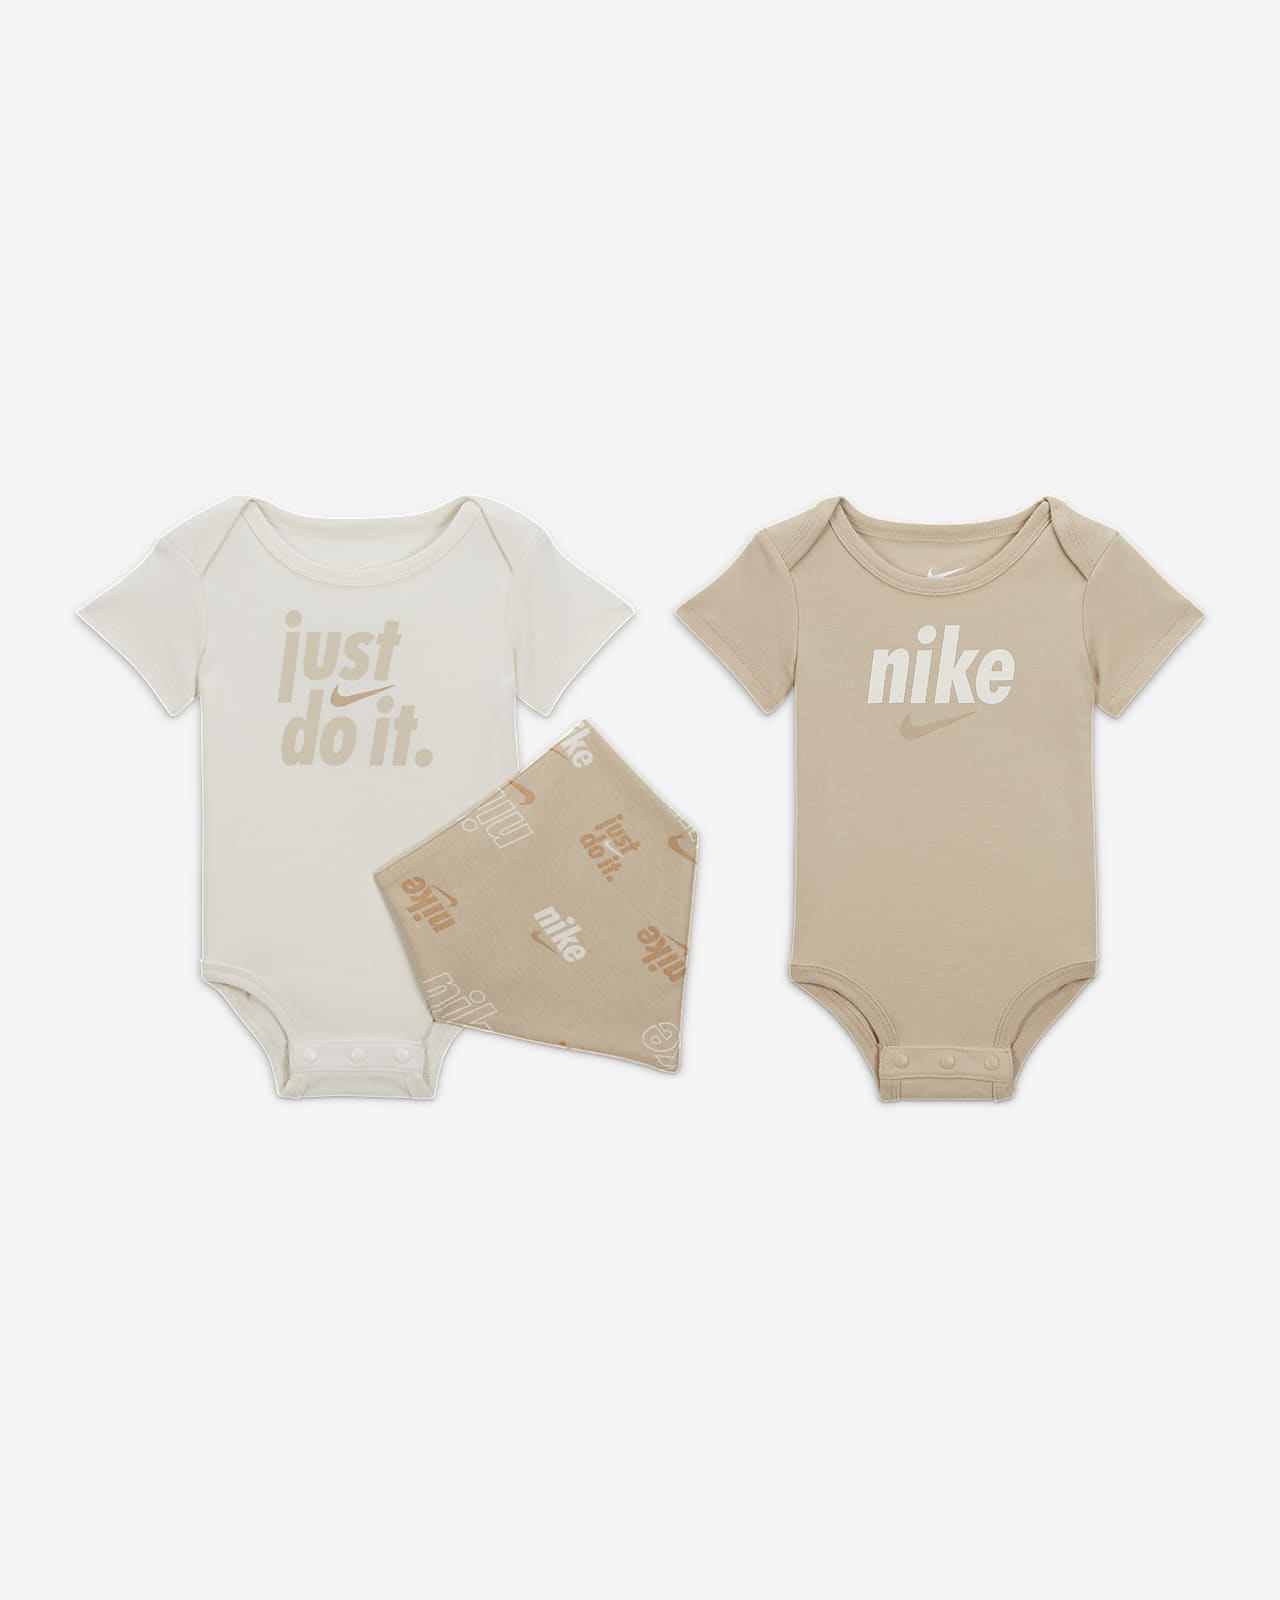 Nike E1D1 Bib and Bodysuit Set Baby Set